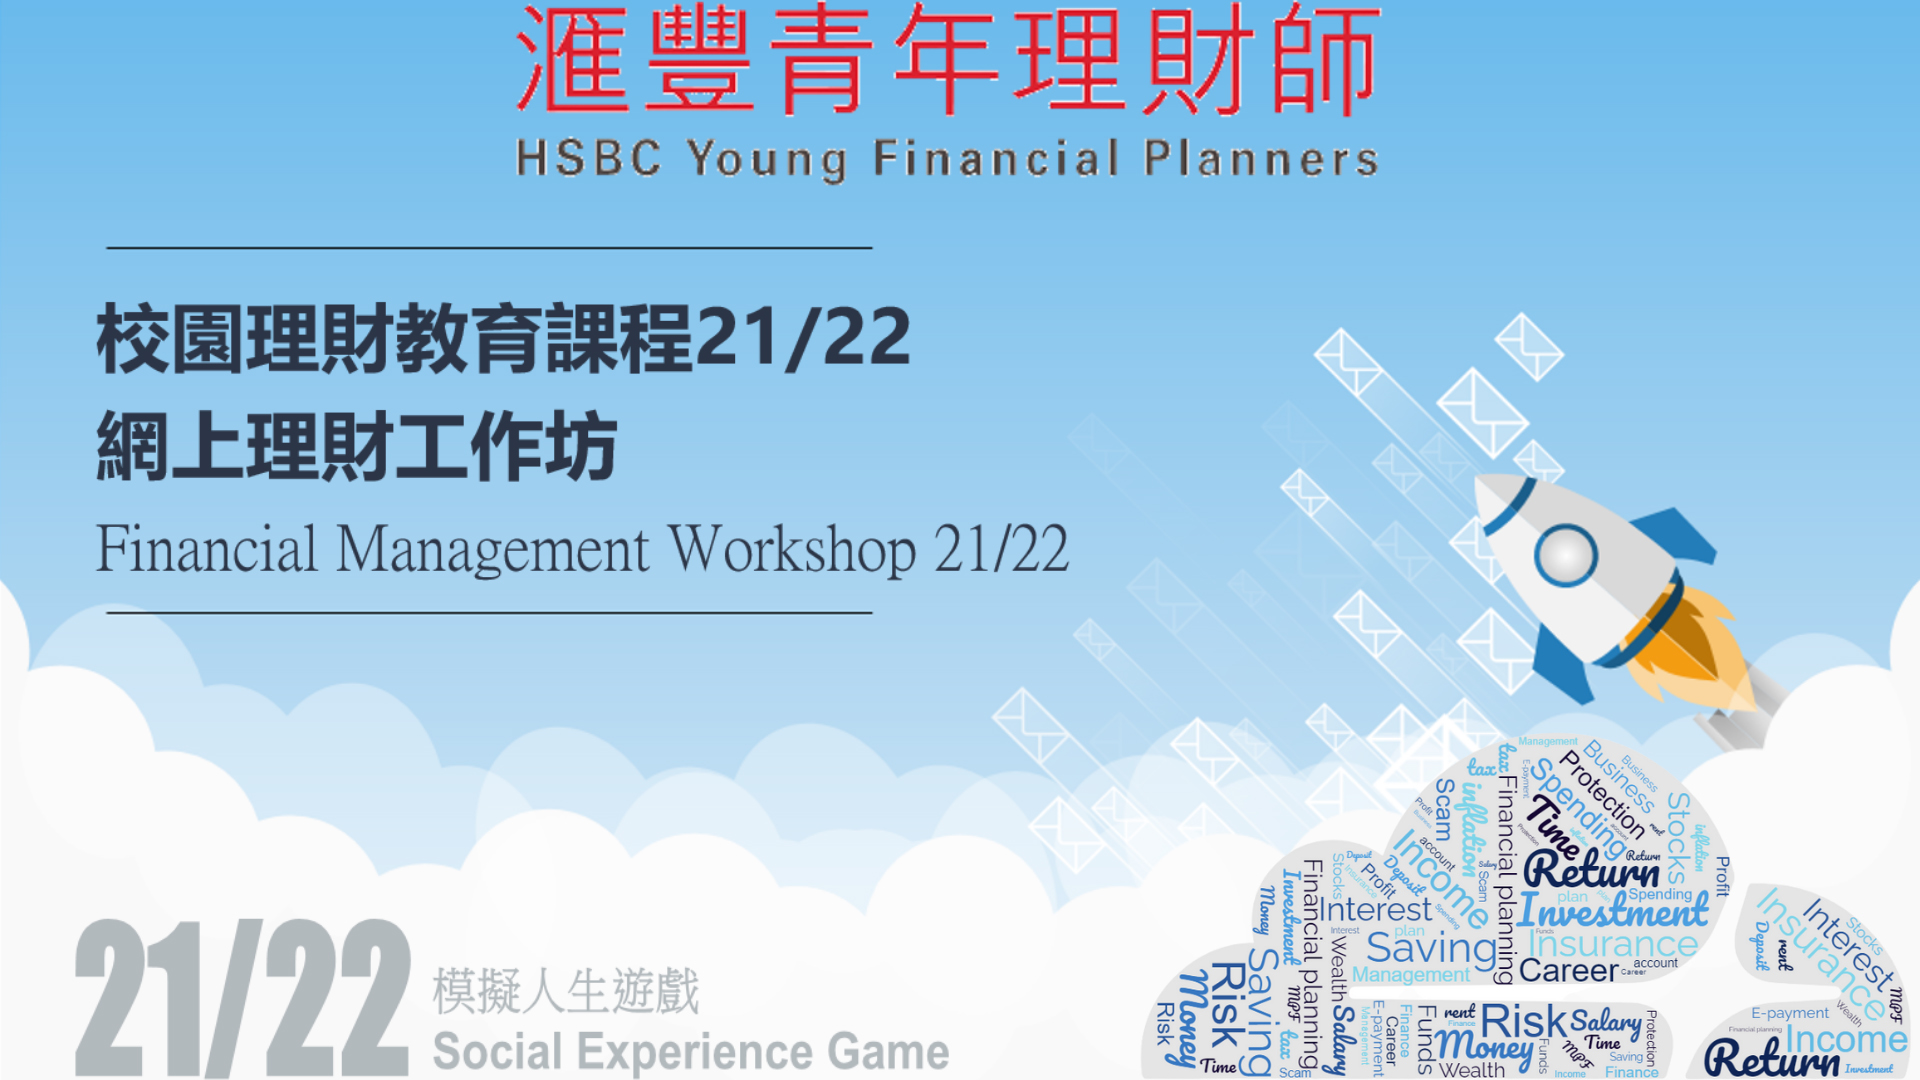 Financial Management Workshop: Preparing for Your Future 